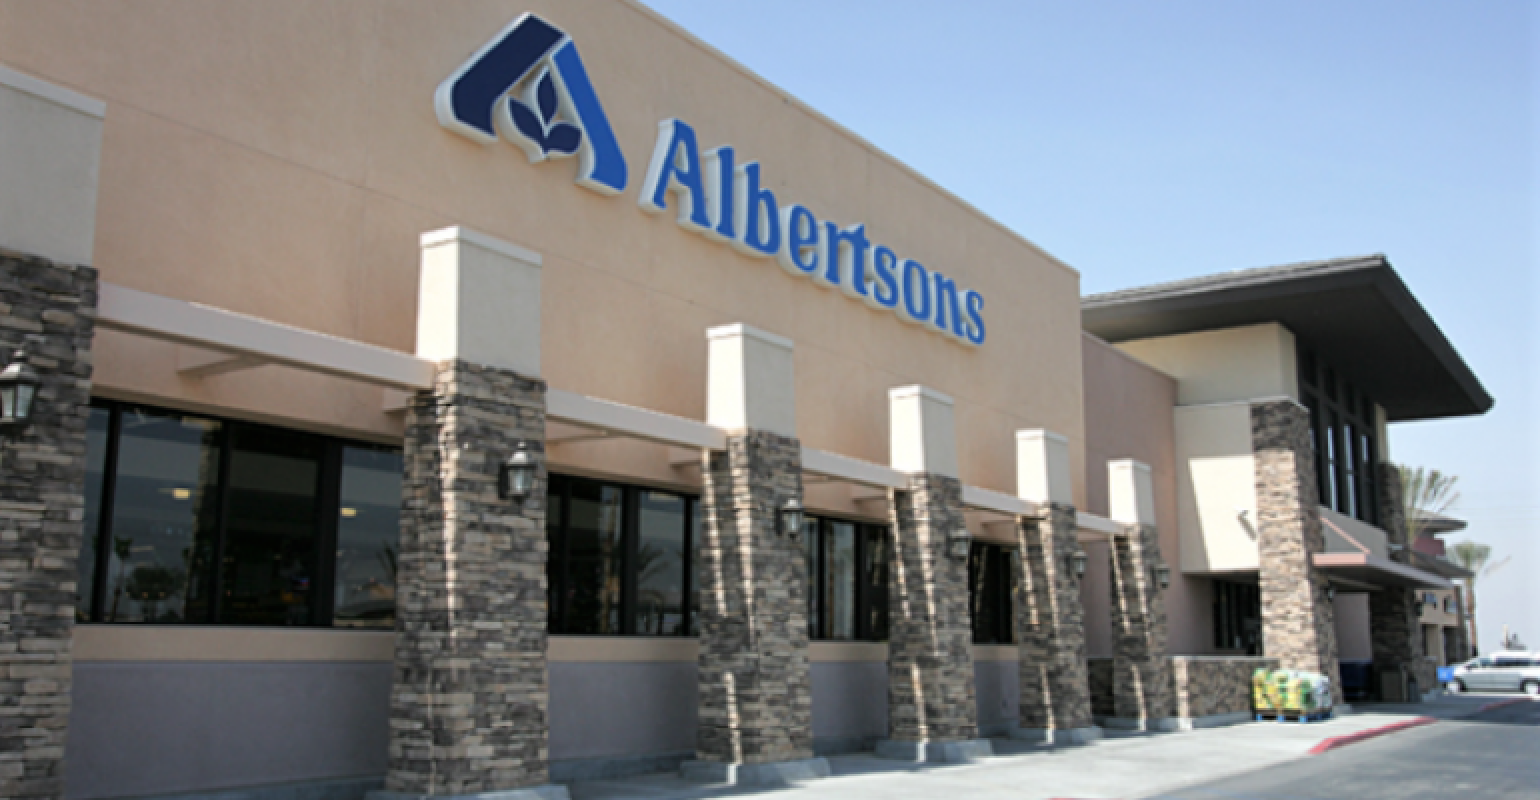 Albertsons Companies storefront